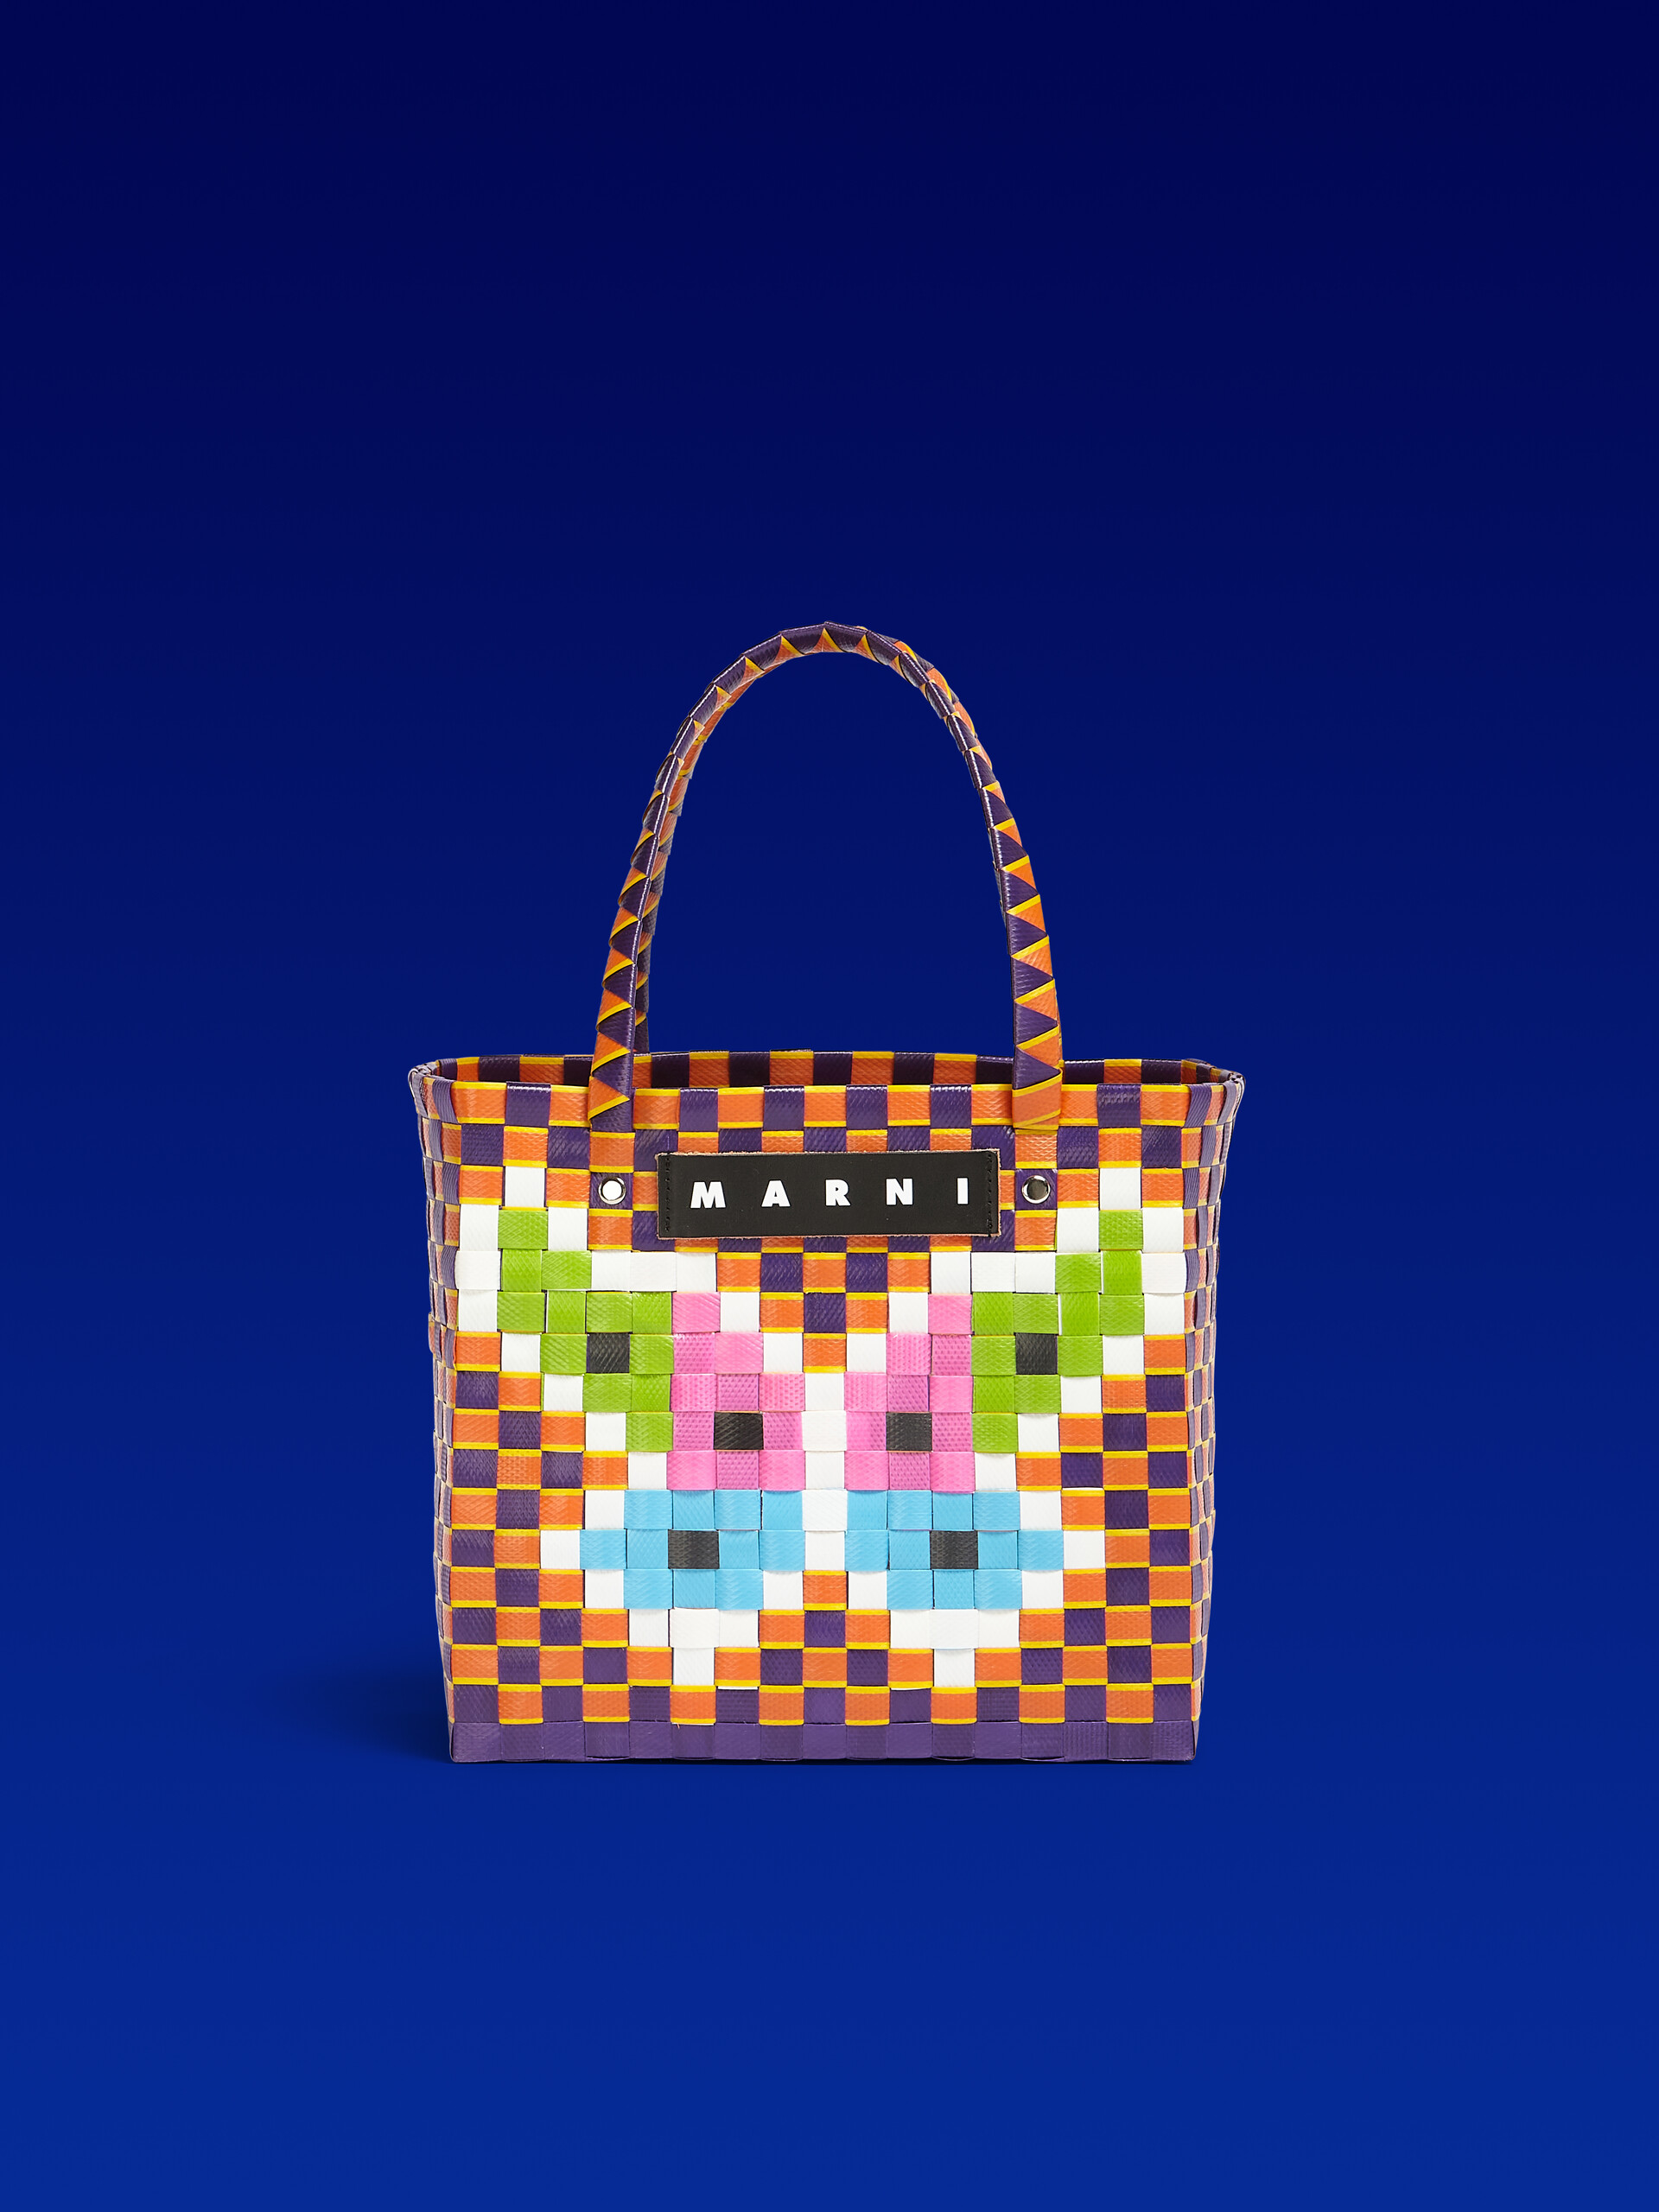 MARNI MARKET FLOWER MINI BASKET bag in orange butterfly motif - Shopping Bags - Image 1